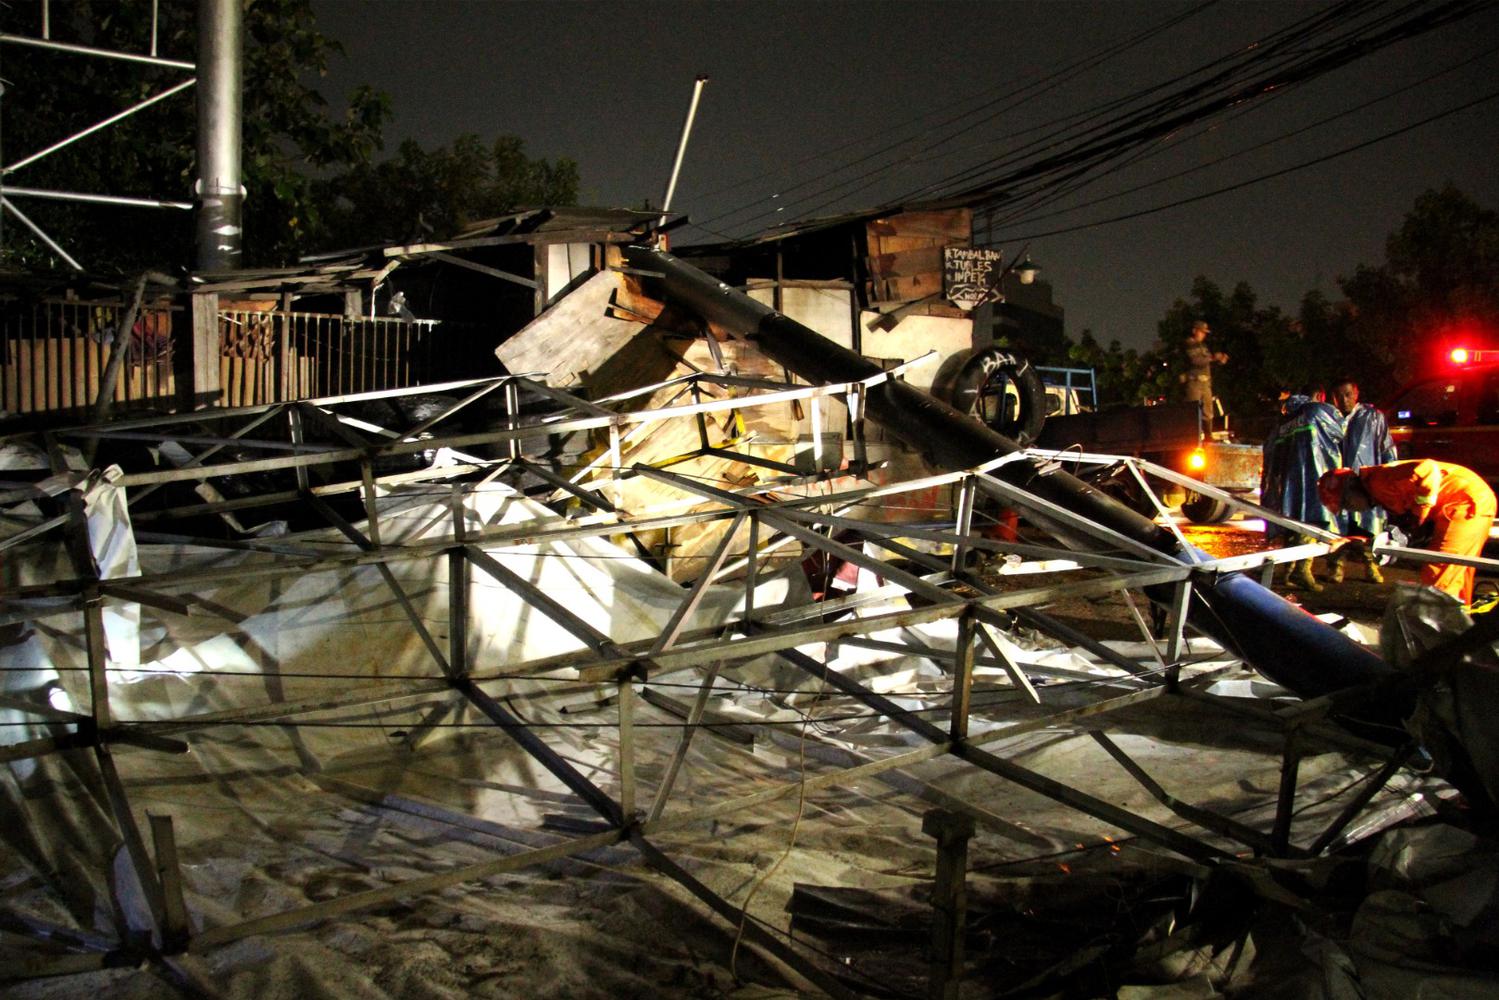 Petugas Pemadam Kebakaran bersama Badan Penanggulangan Bencana Daerah (BPBD) berusaha menyingkirkan tiang baliho yang roboh di kawasan alan raya Bekasi, Jakarta Timur, Rabu (4/12/2019) malam. Baliho tersebut roboh akibat hujan disertai angin kencang yang melanda kawasan tersebut yang mengakibatkan satu rumah rusak.